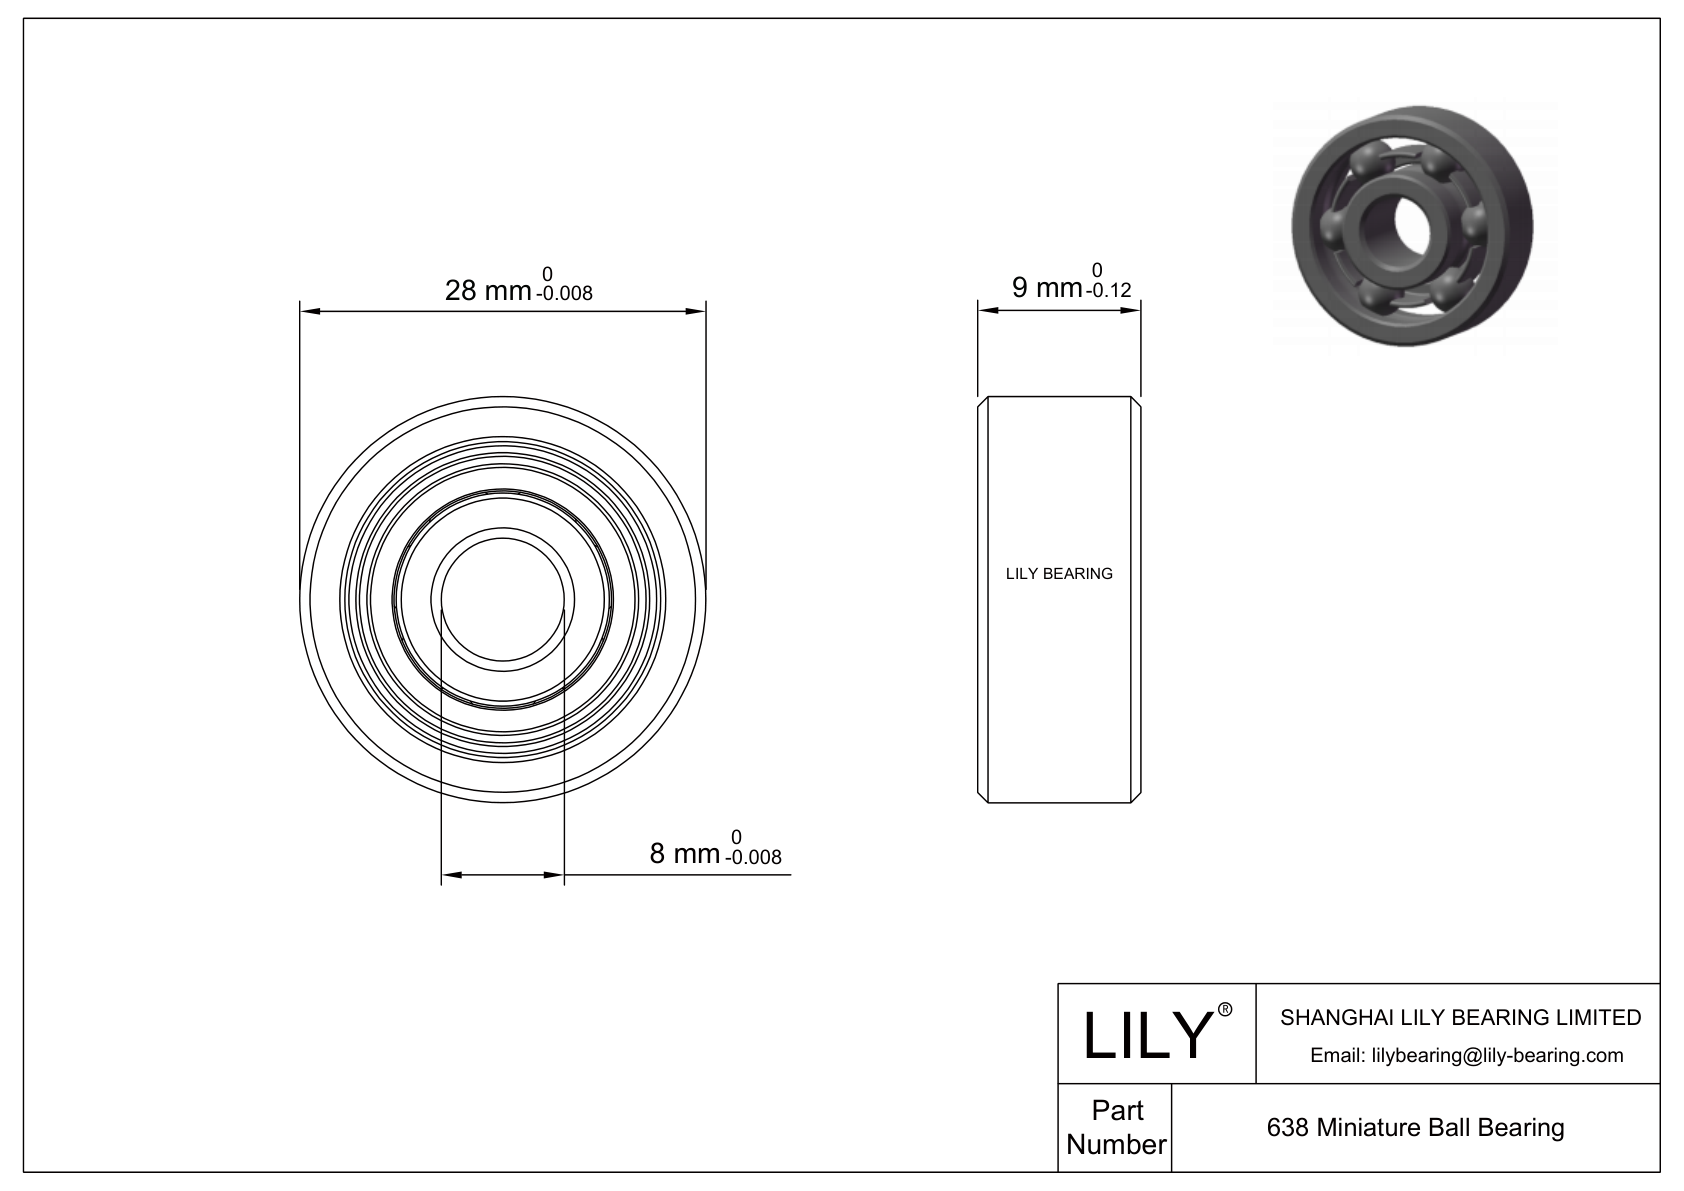 LILY-PU63845-20 Polyurethane Coated Bearing cad drawing